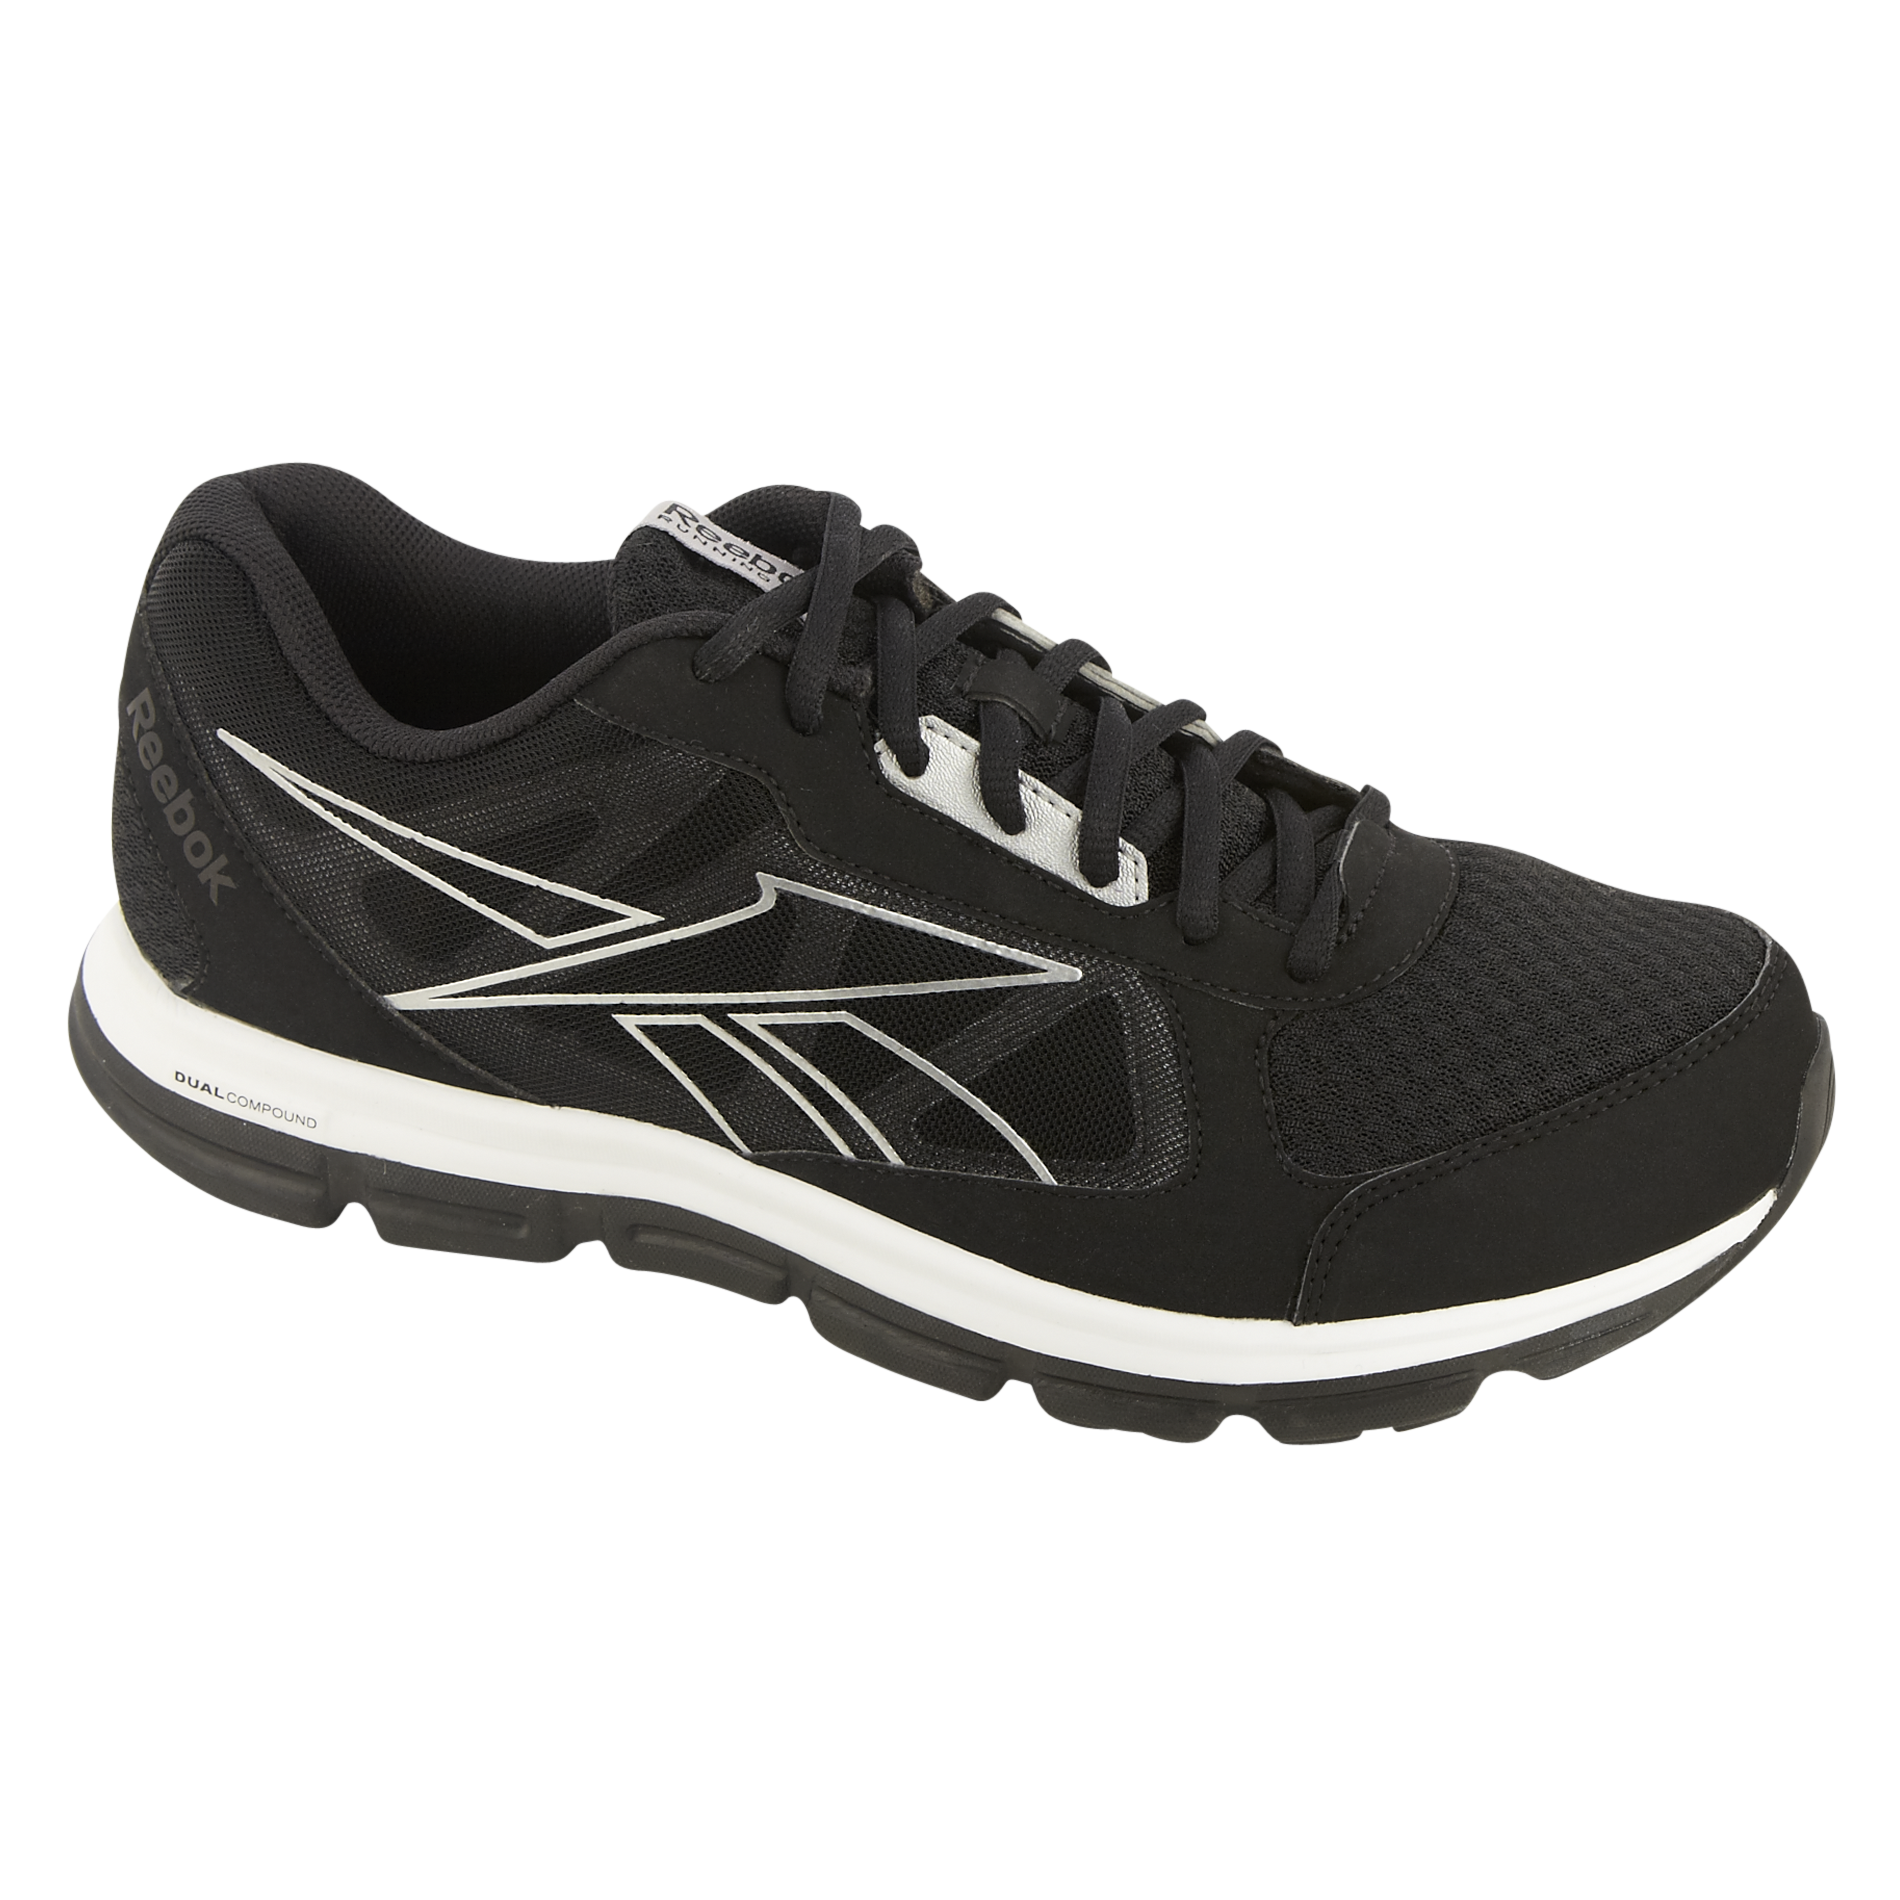 Reebok Men's Dual Turbo Running Athletic Shoe - Black/Grey